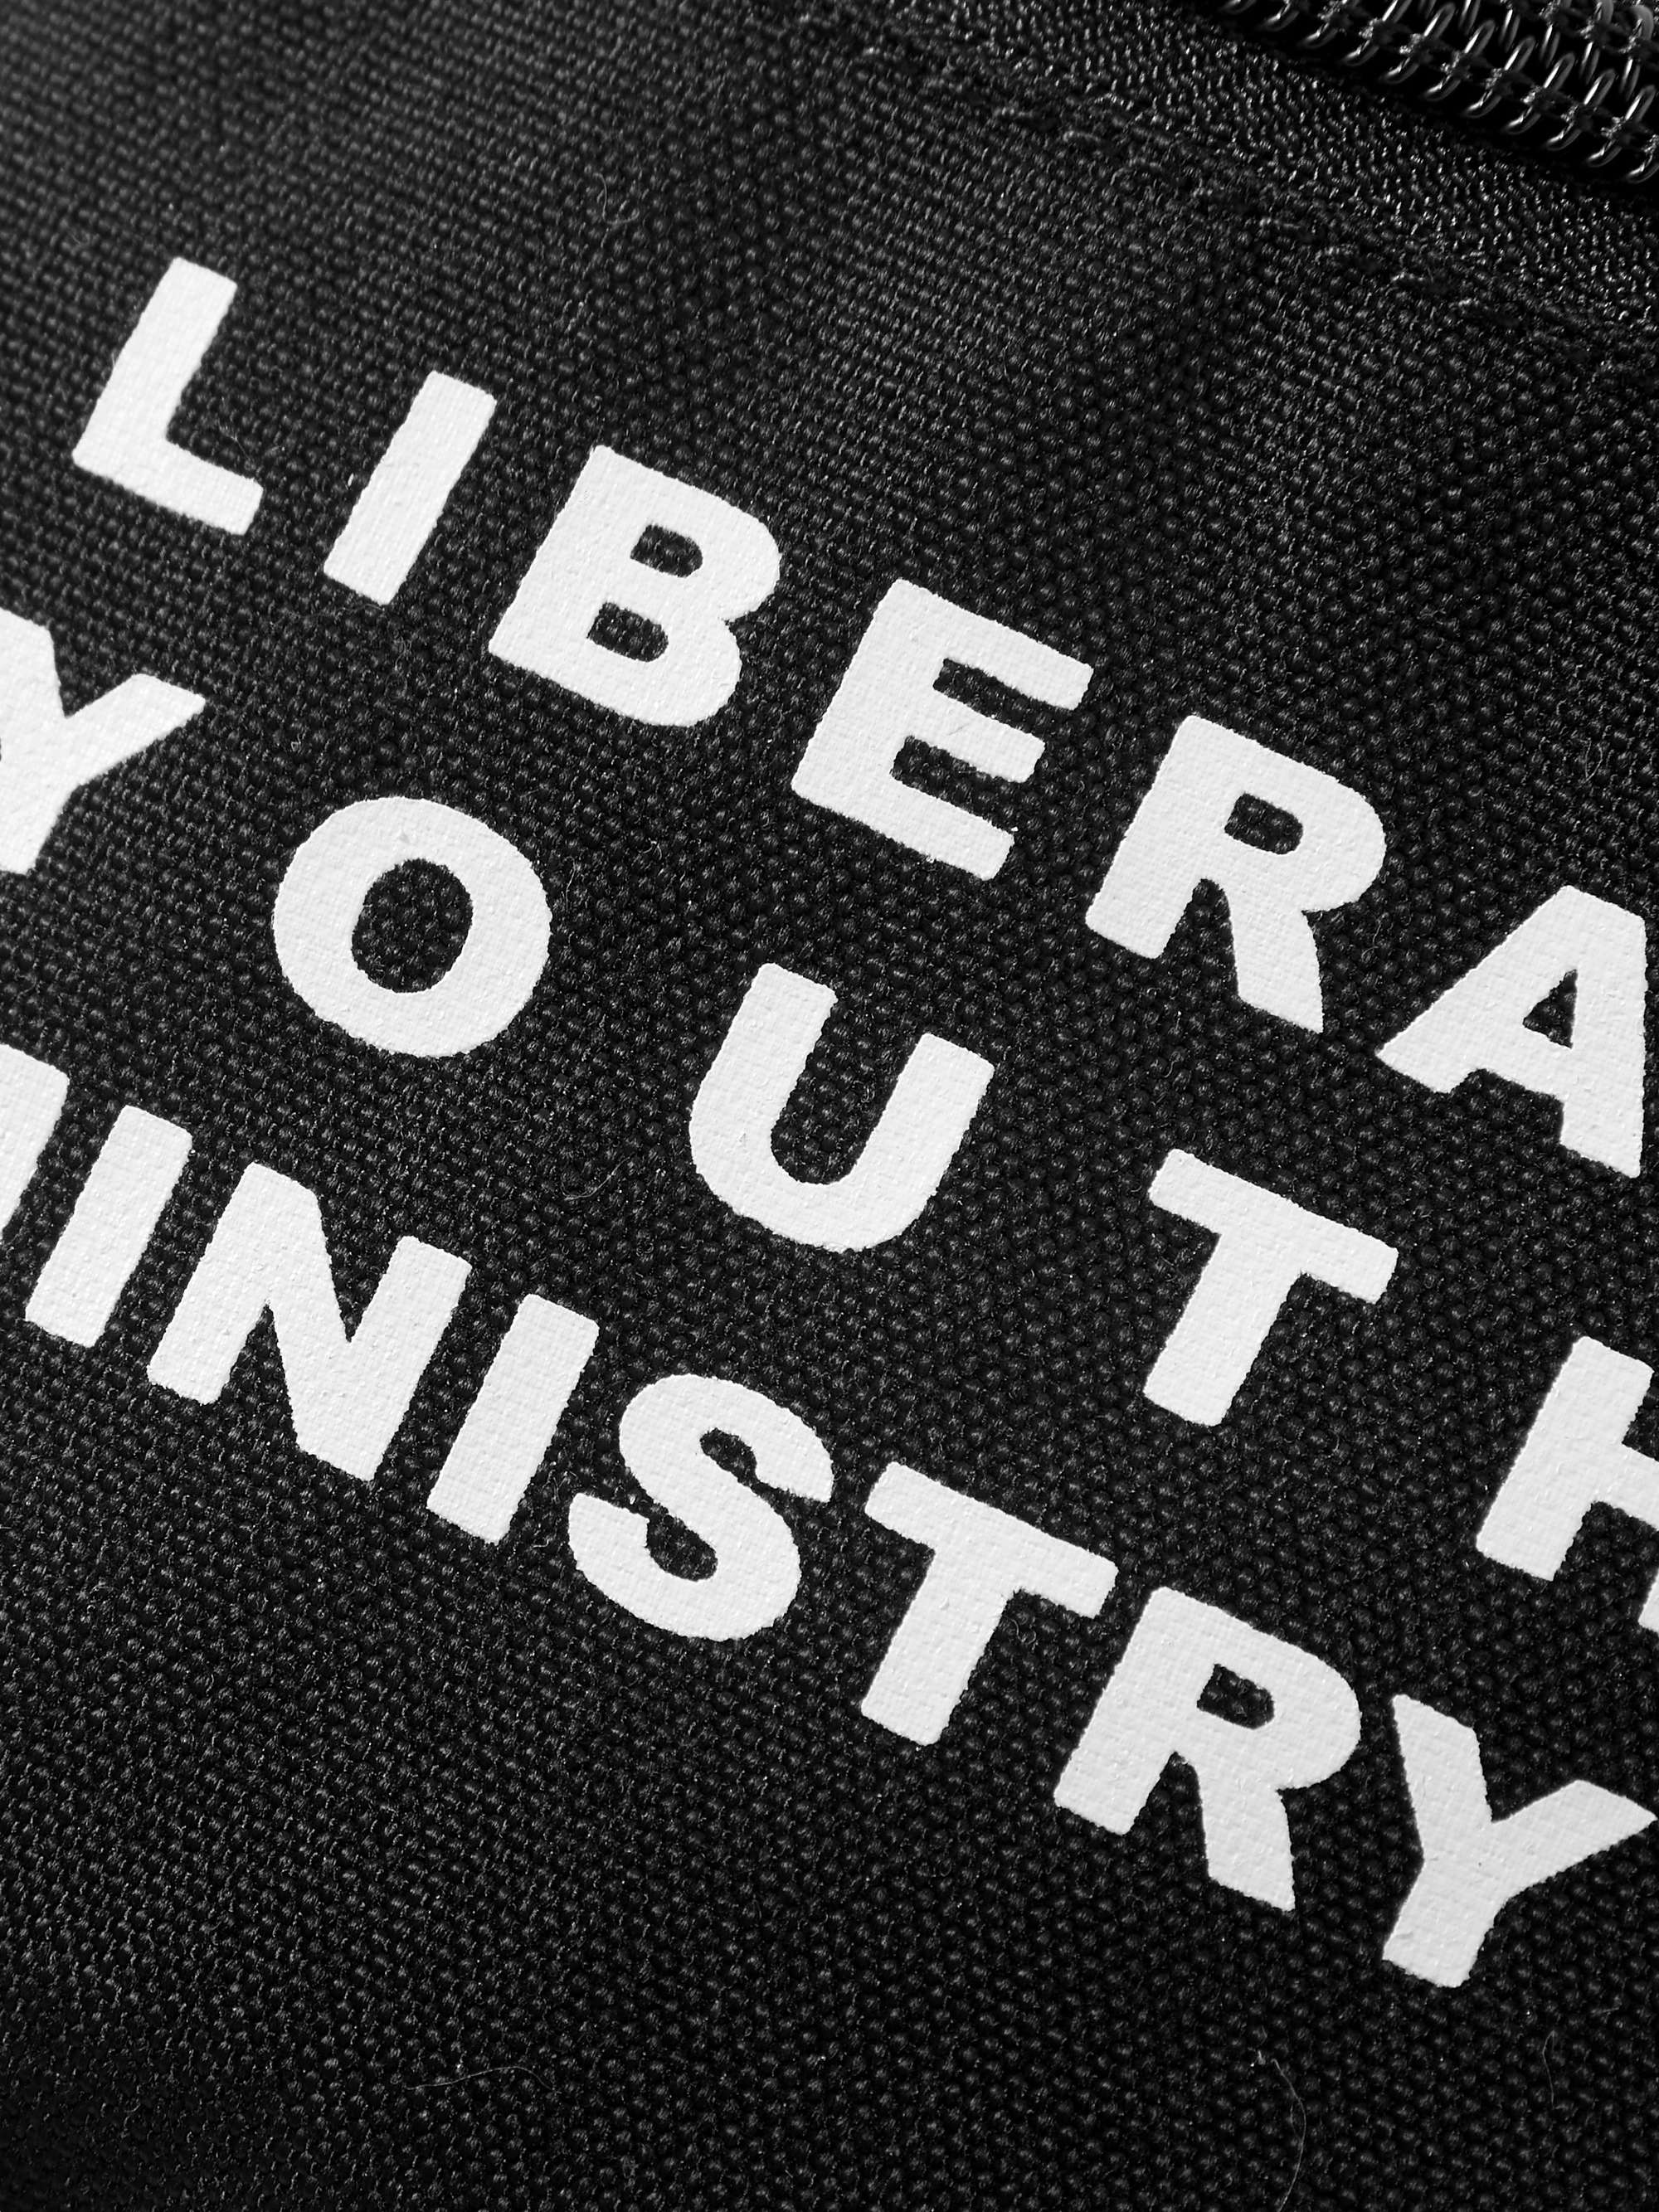 LIBERAL YOUTH MINISTRY Logo-Print Shell Belt Bag